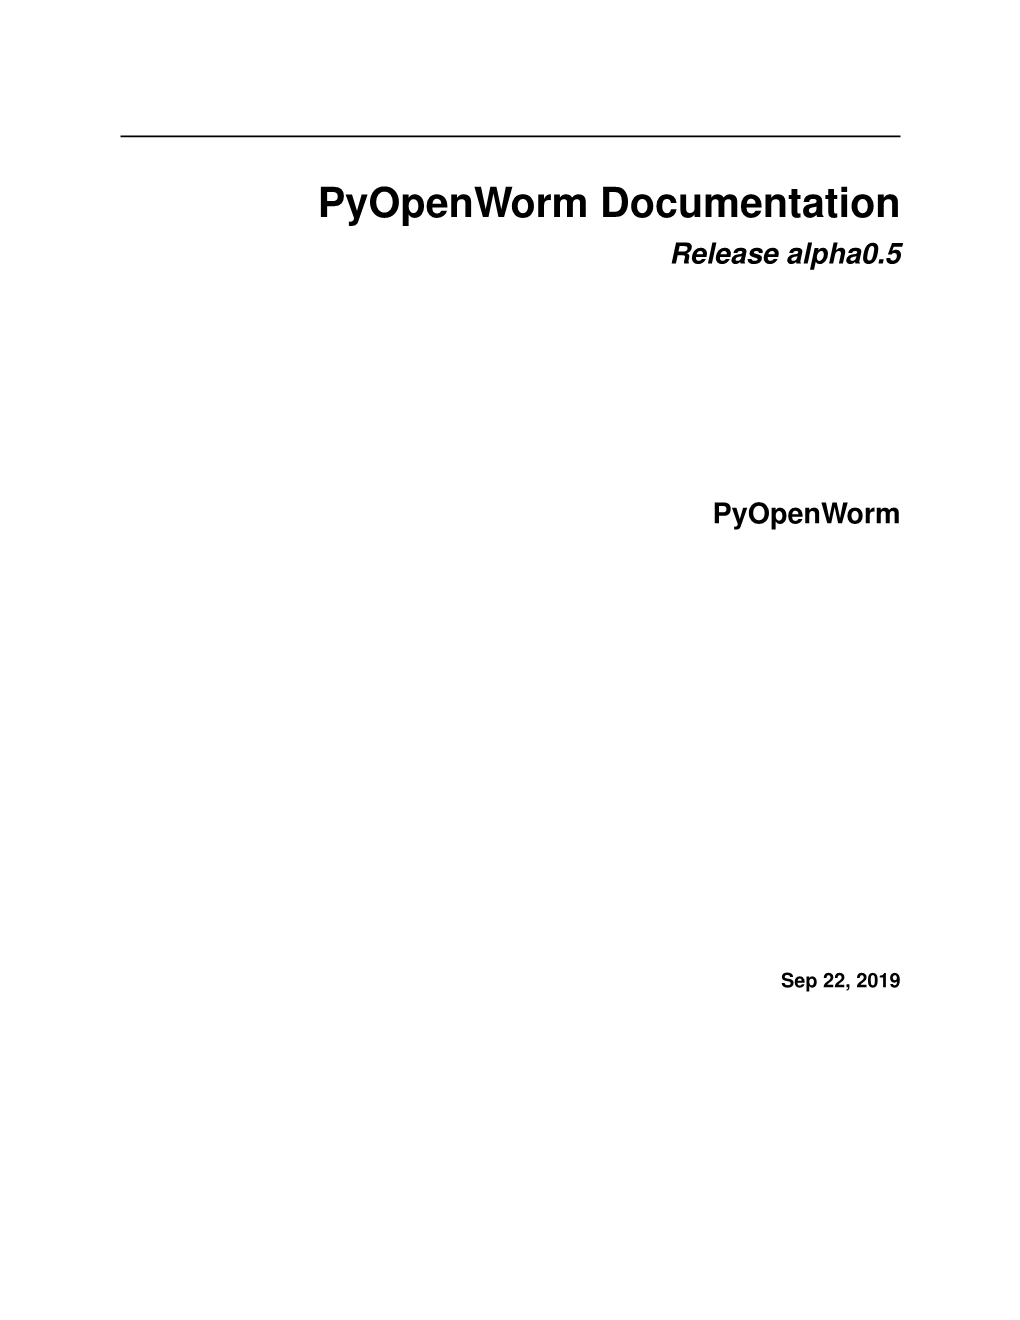 Pyopenworm Documentation Release Alpha0.5